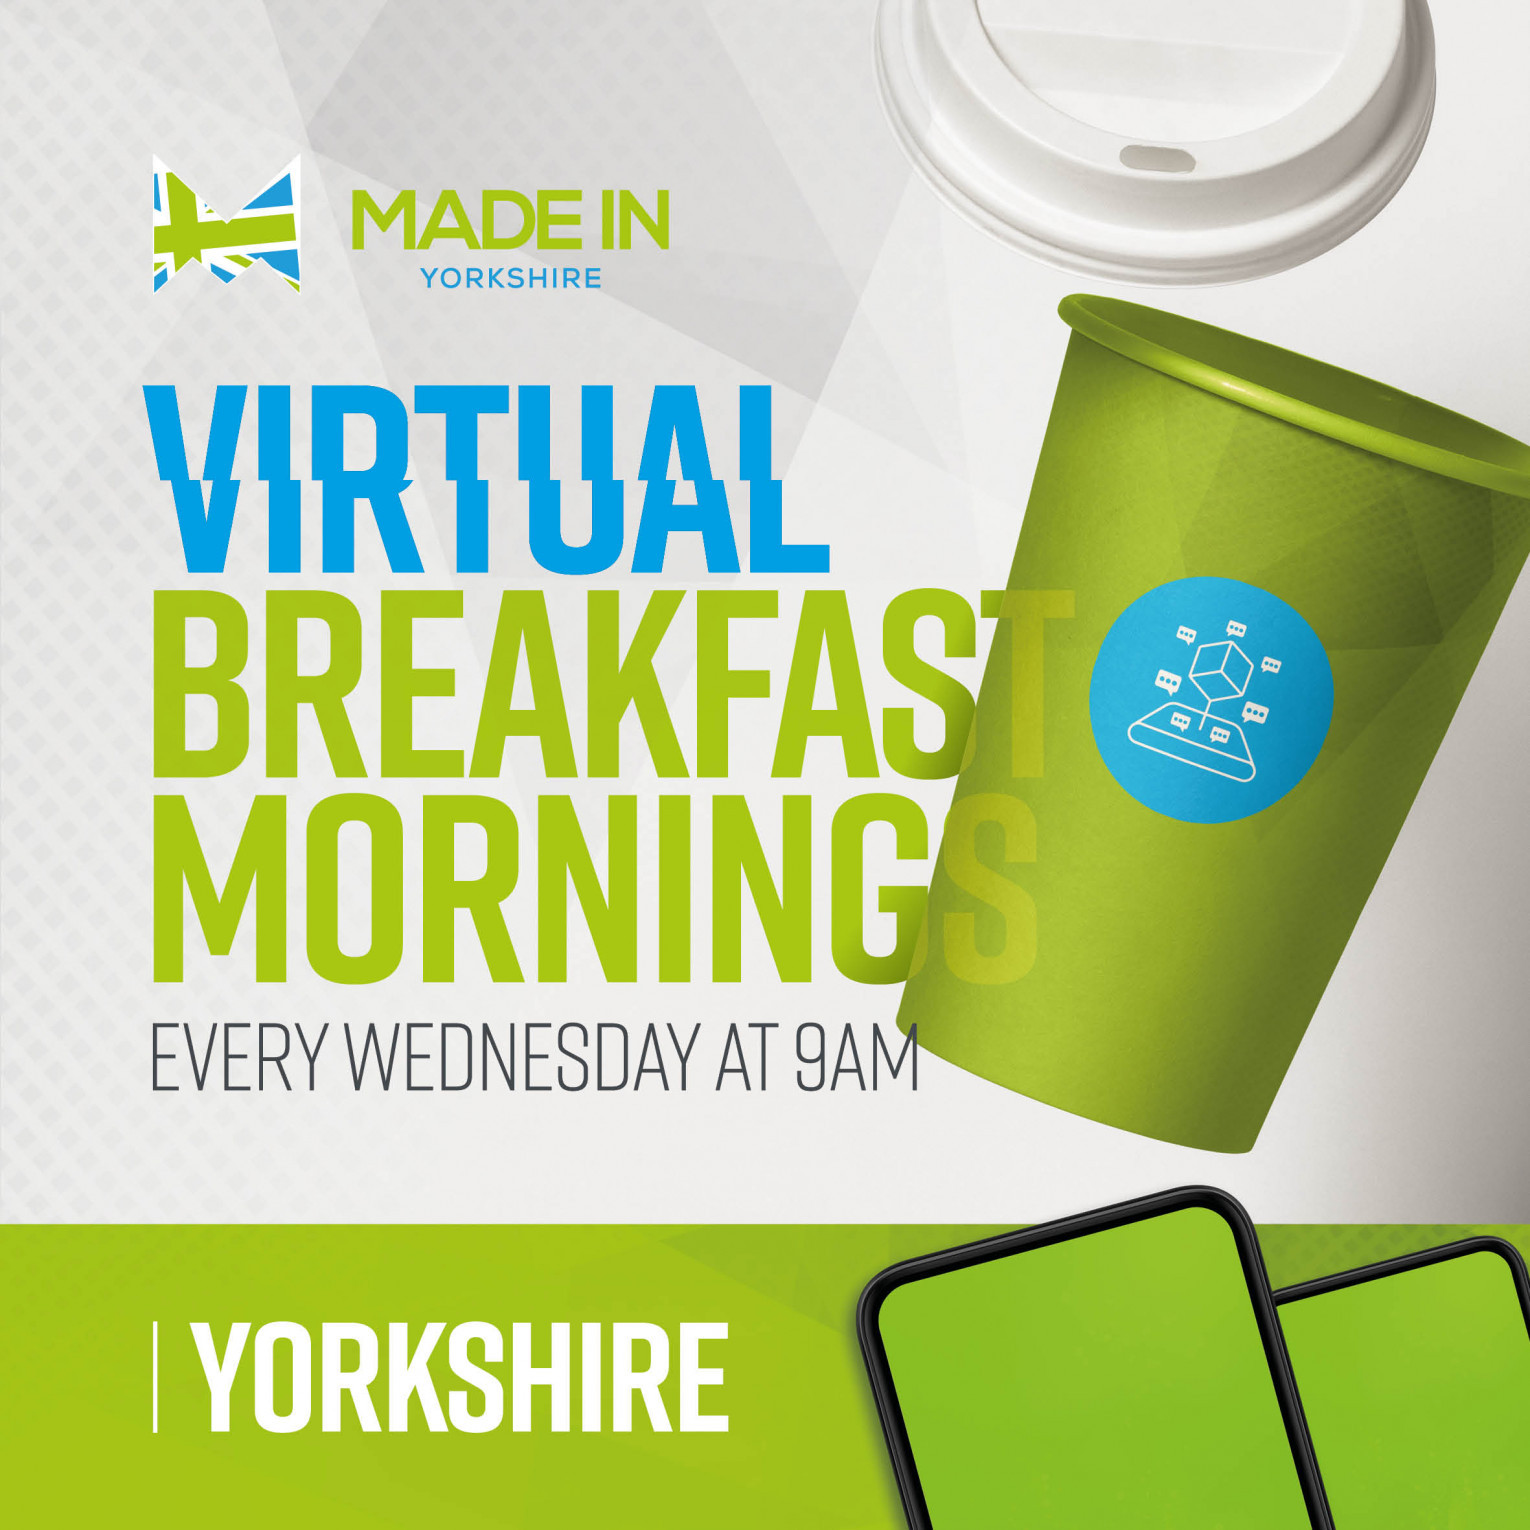 Made in Yorkshire Virtual Breakfast with Portakabin